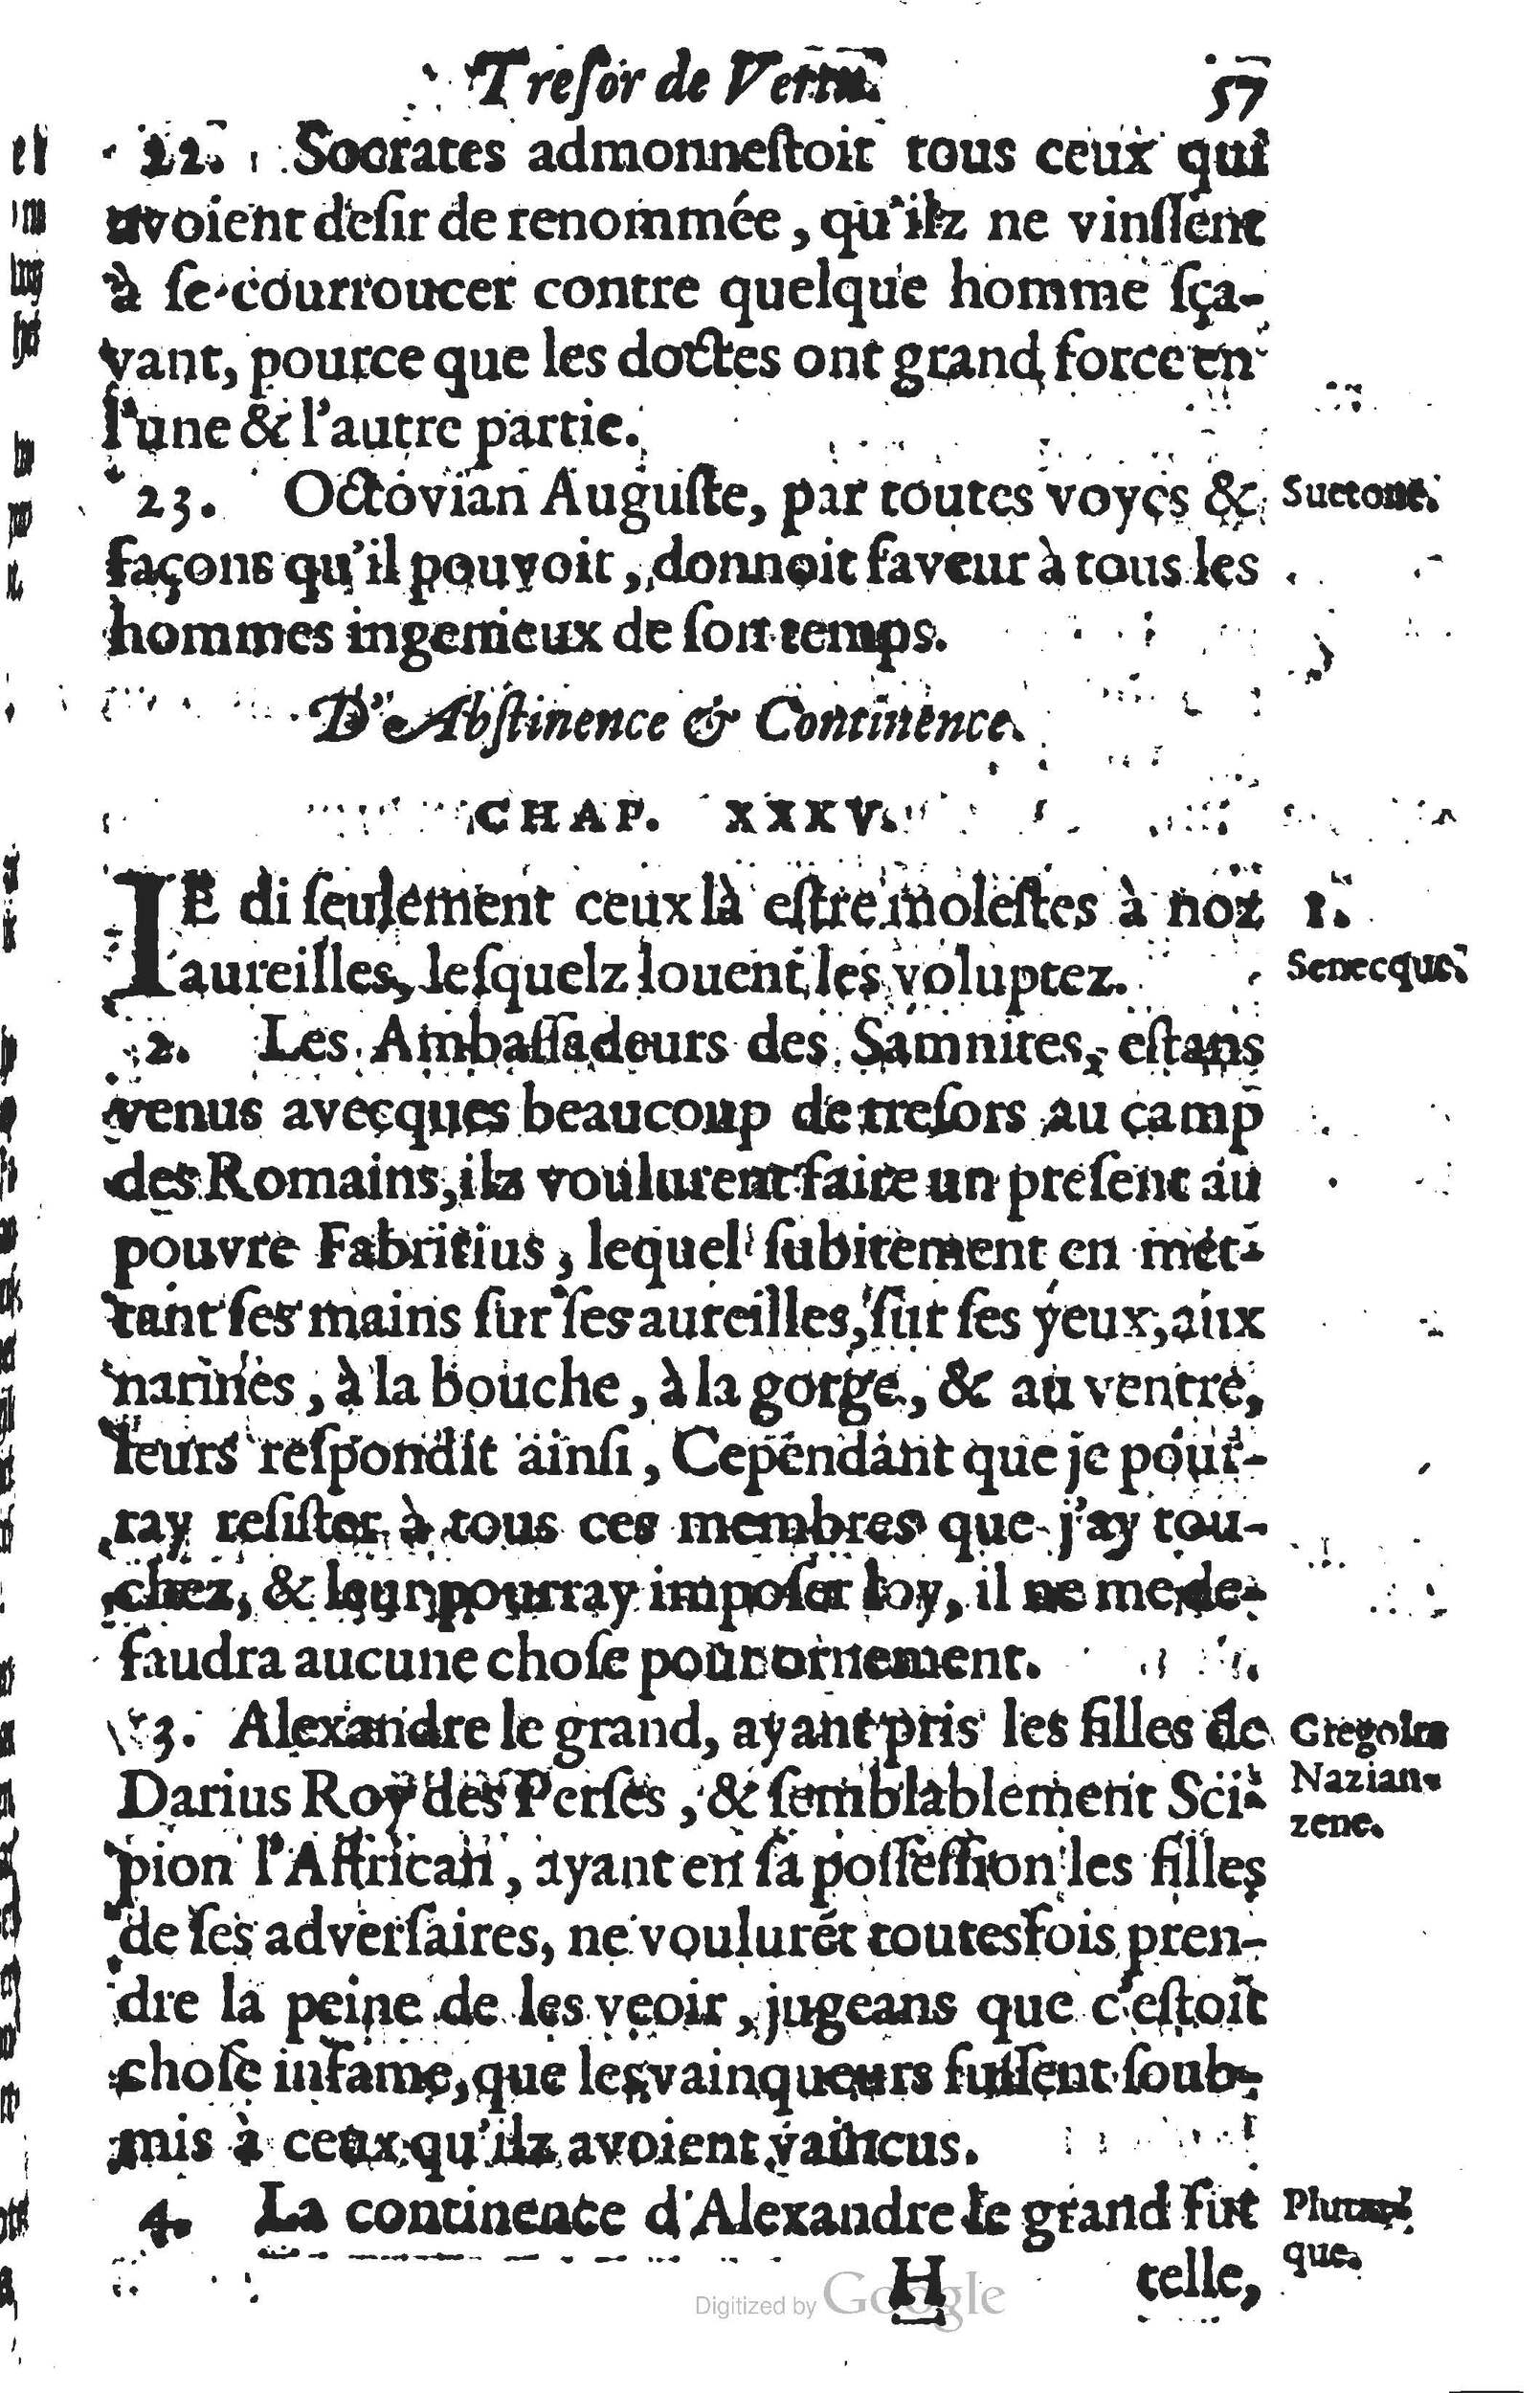 1594 Cornelis Claesz -Trésor de vertu - BU Leiden_Page_113.jpg